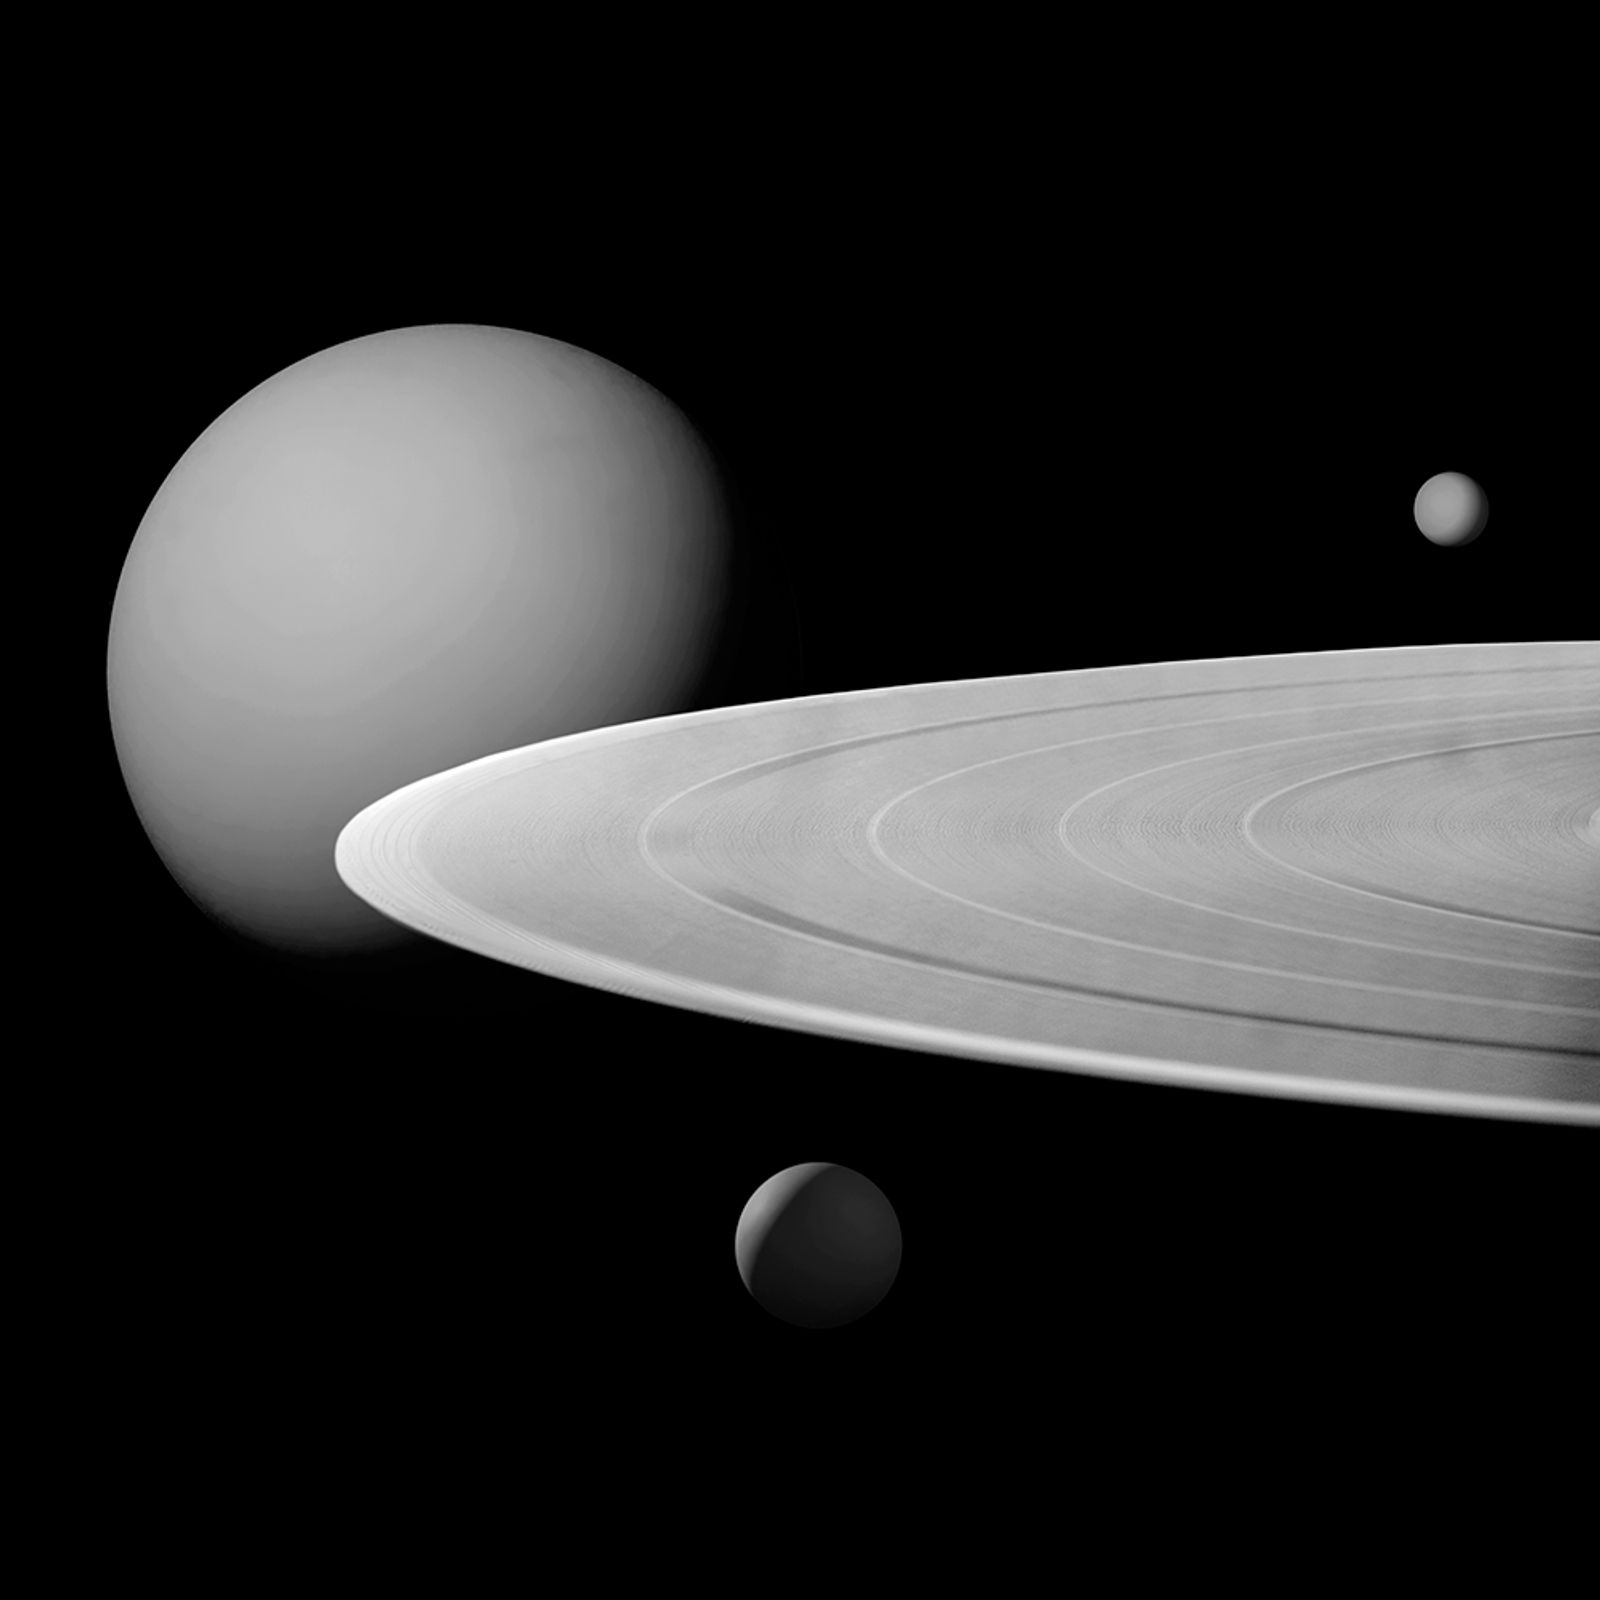 © Balazs Deim - space 09_ping-pong planets